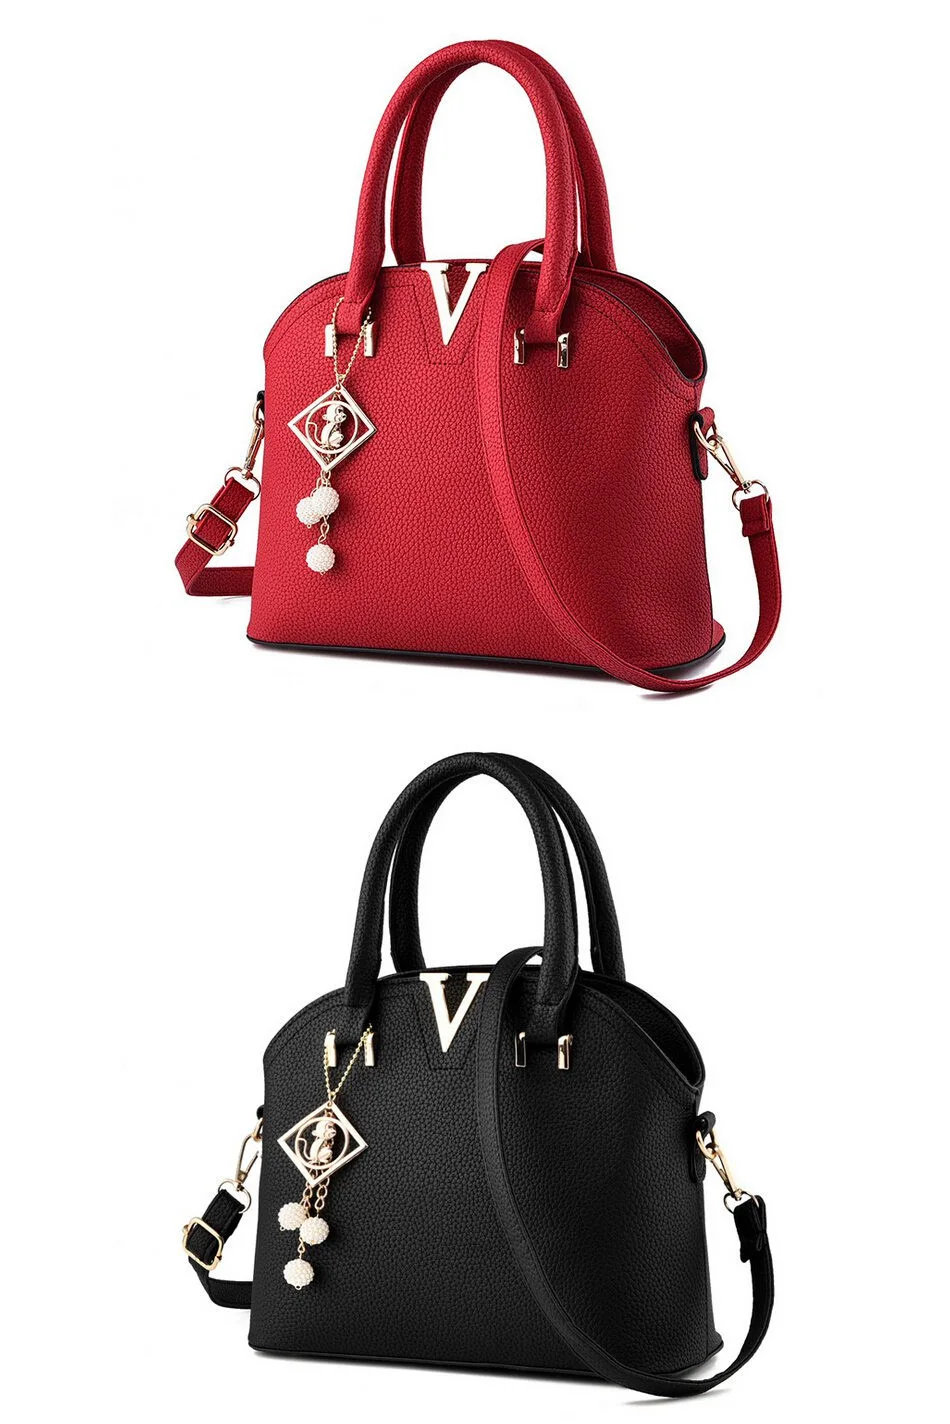 Vogue Star Для женщин кожа Сумки моды оболочки сумки письмо женские сумки сумка сумки на плечо bolsa LA10